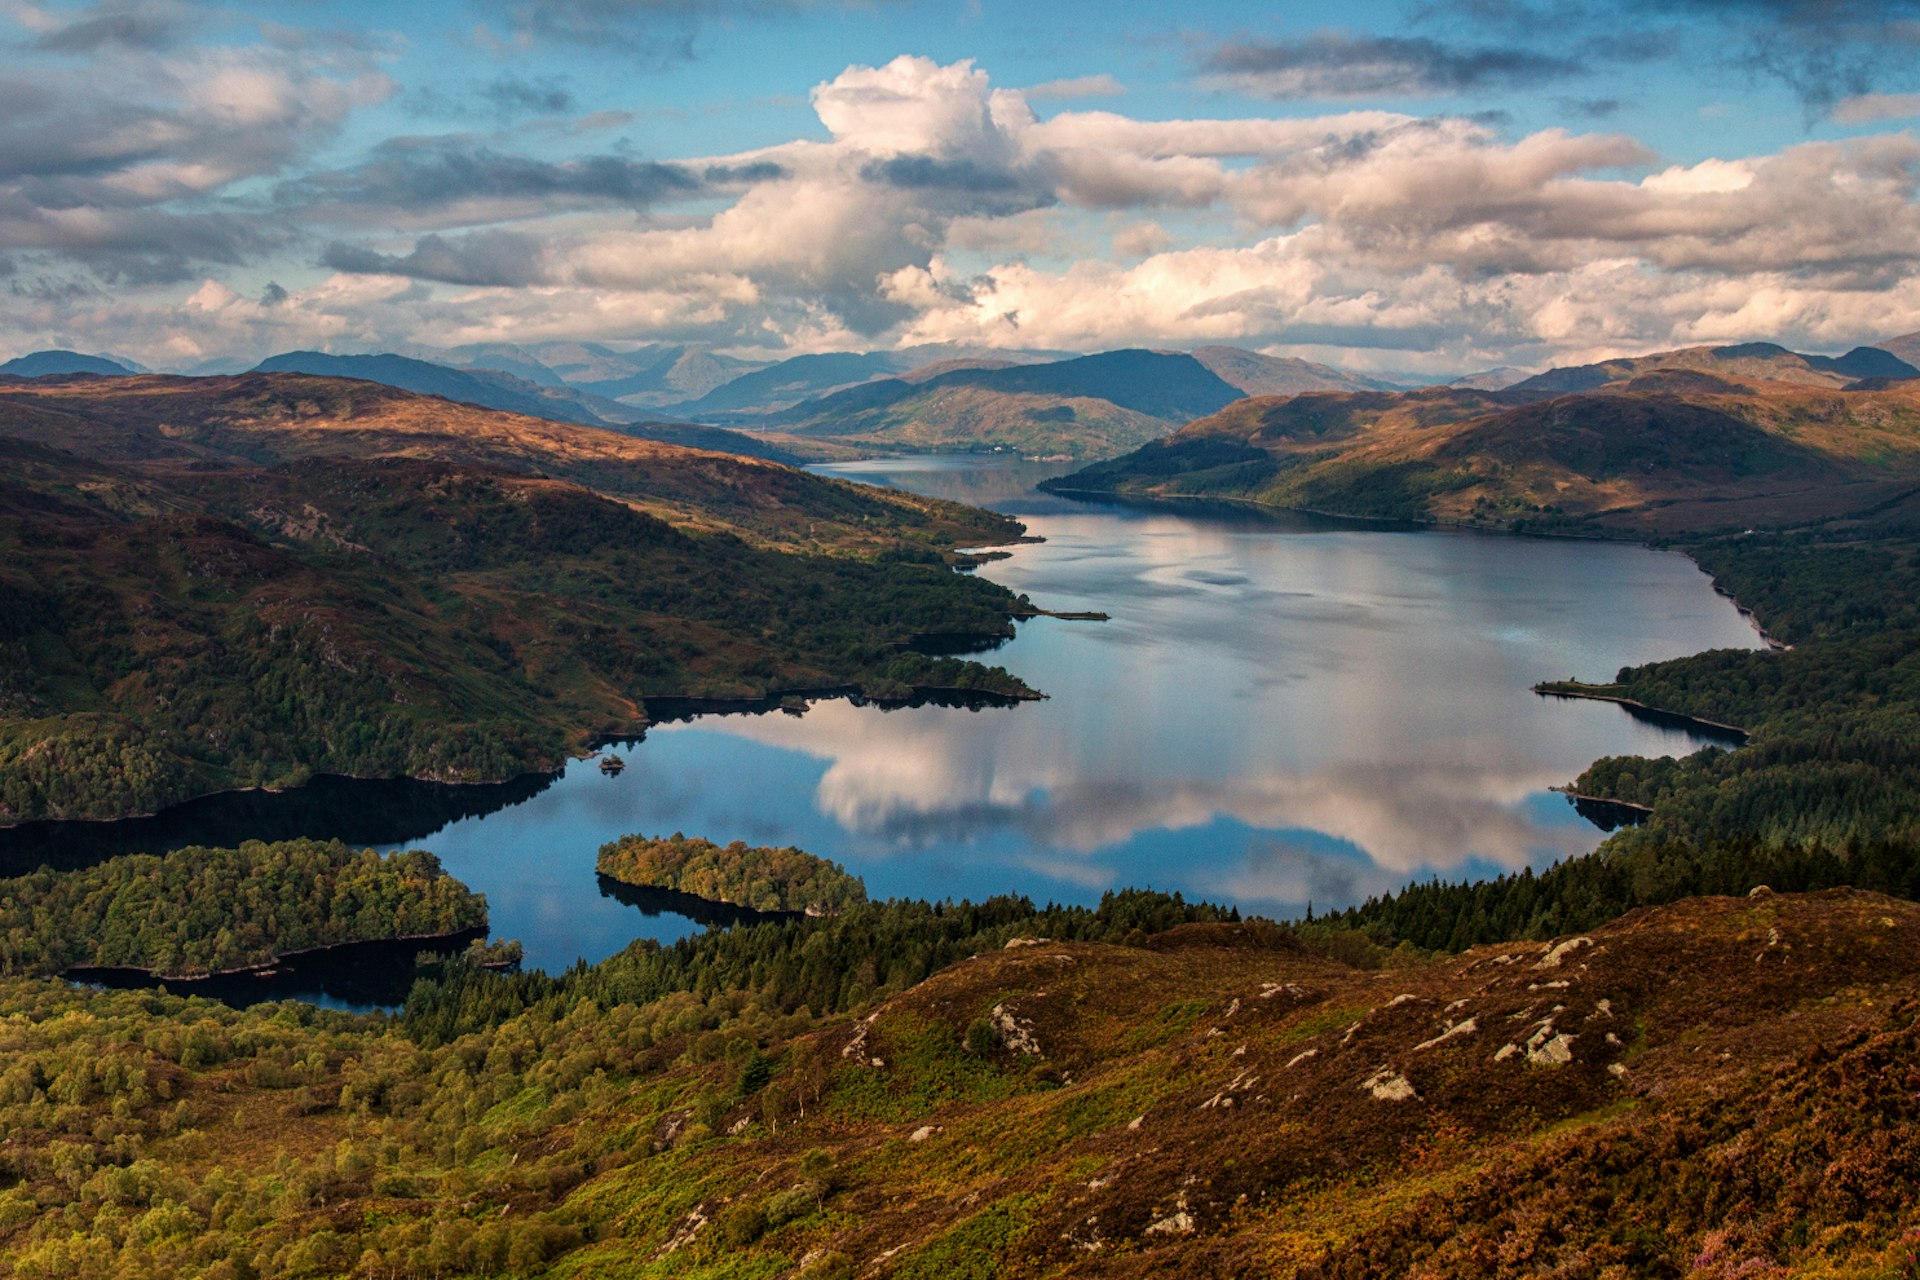 Loch Katrine, the Trossachs. Image by John McSporran / CC BY 2.0